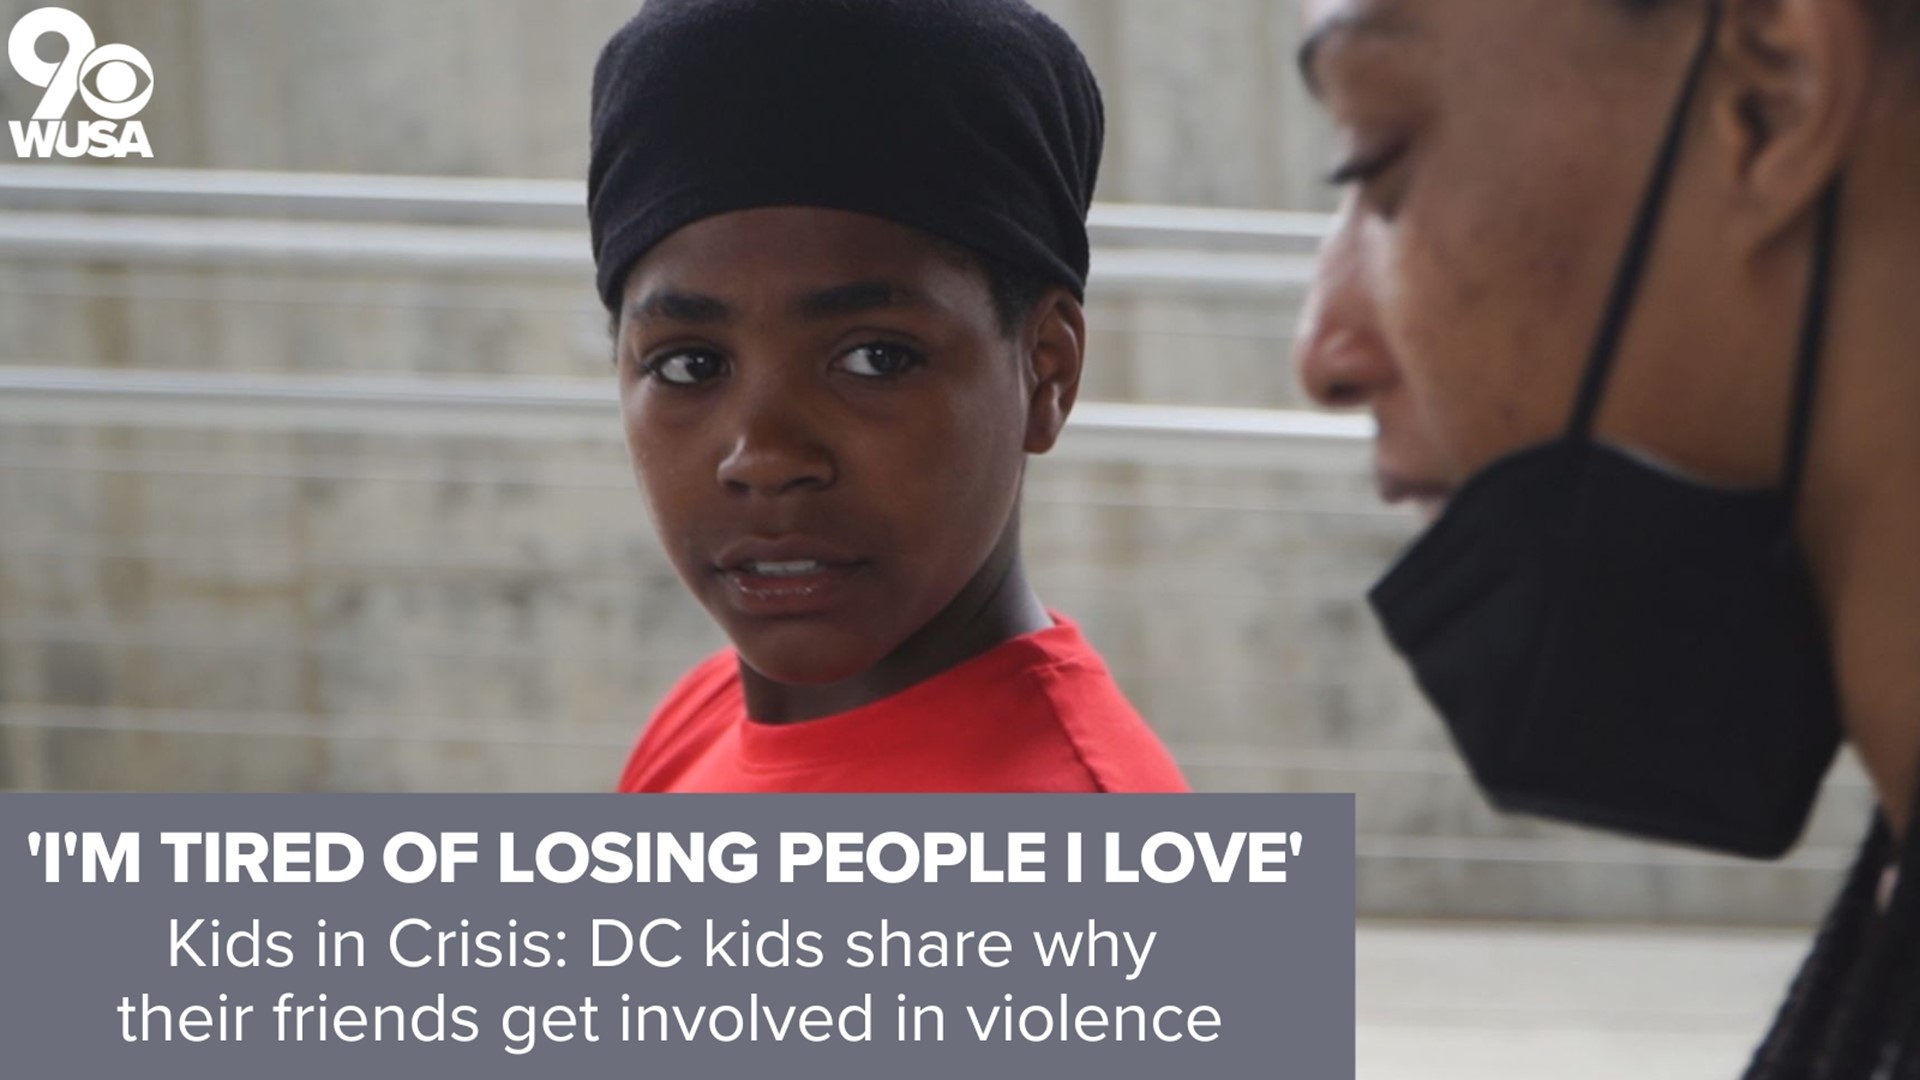 At 12 years old, Rashad Bates has already lost friends to gun violence.